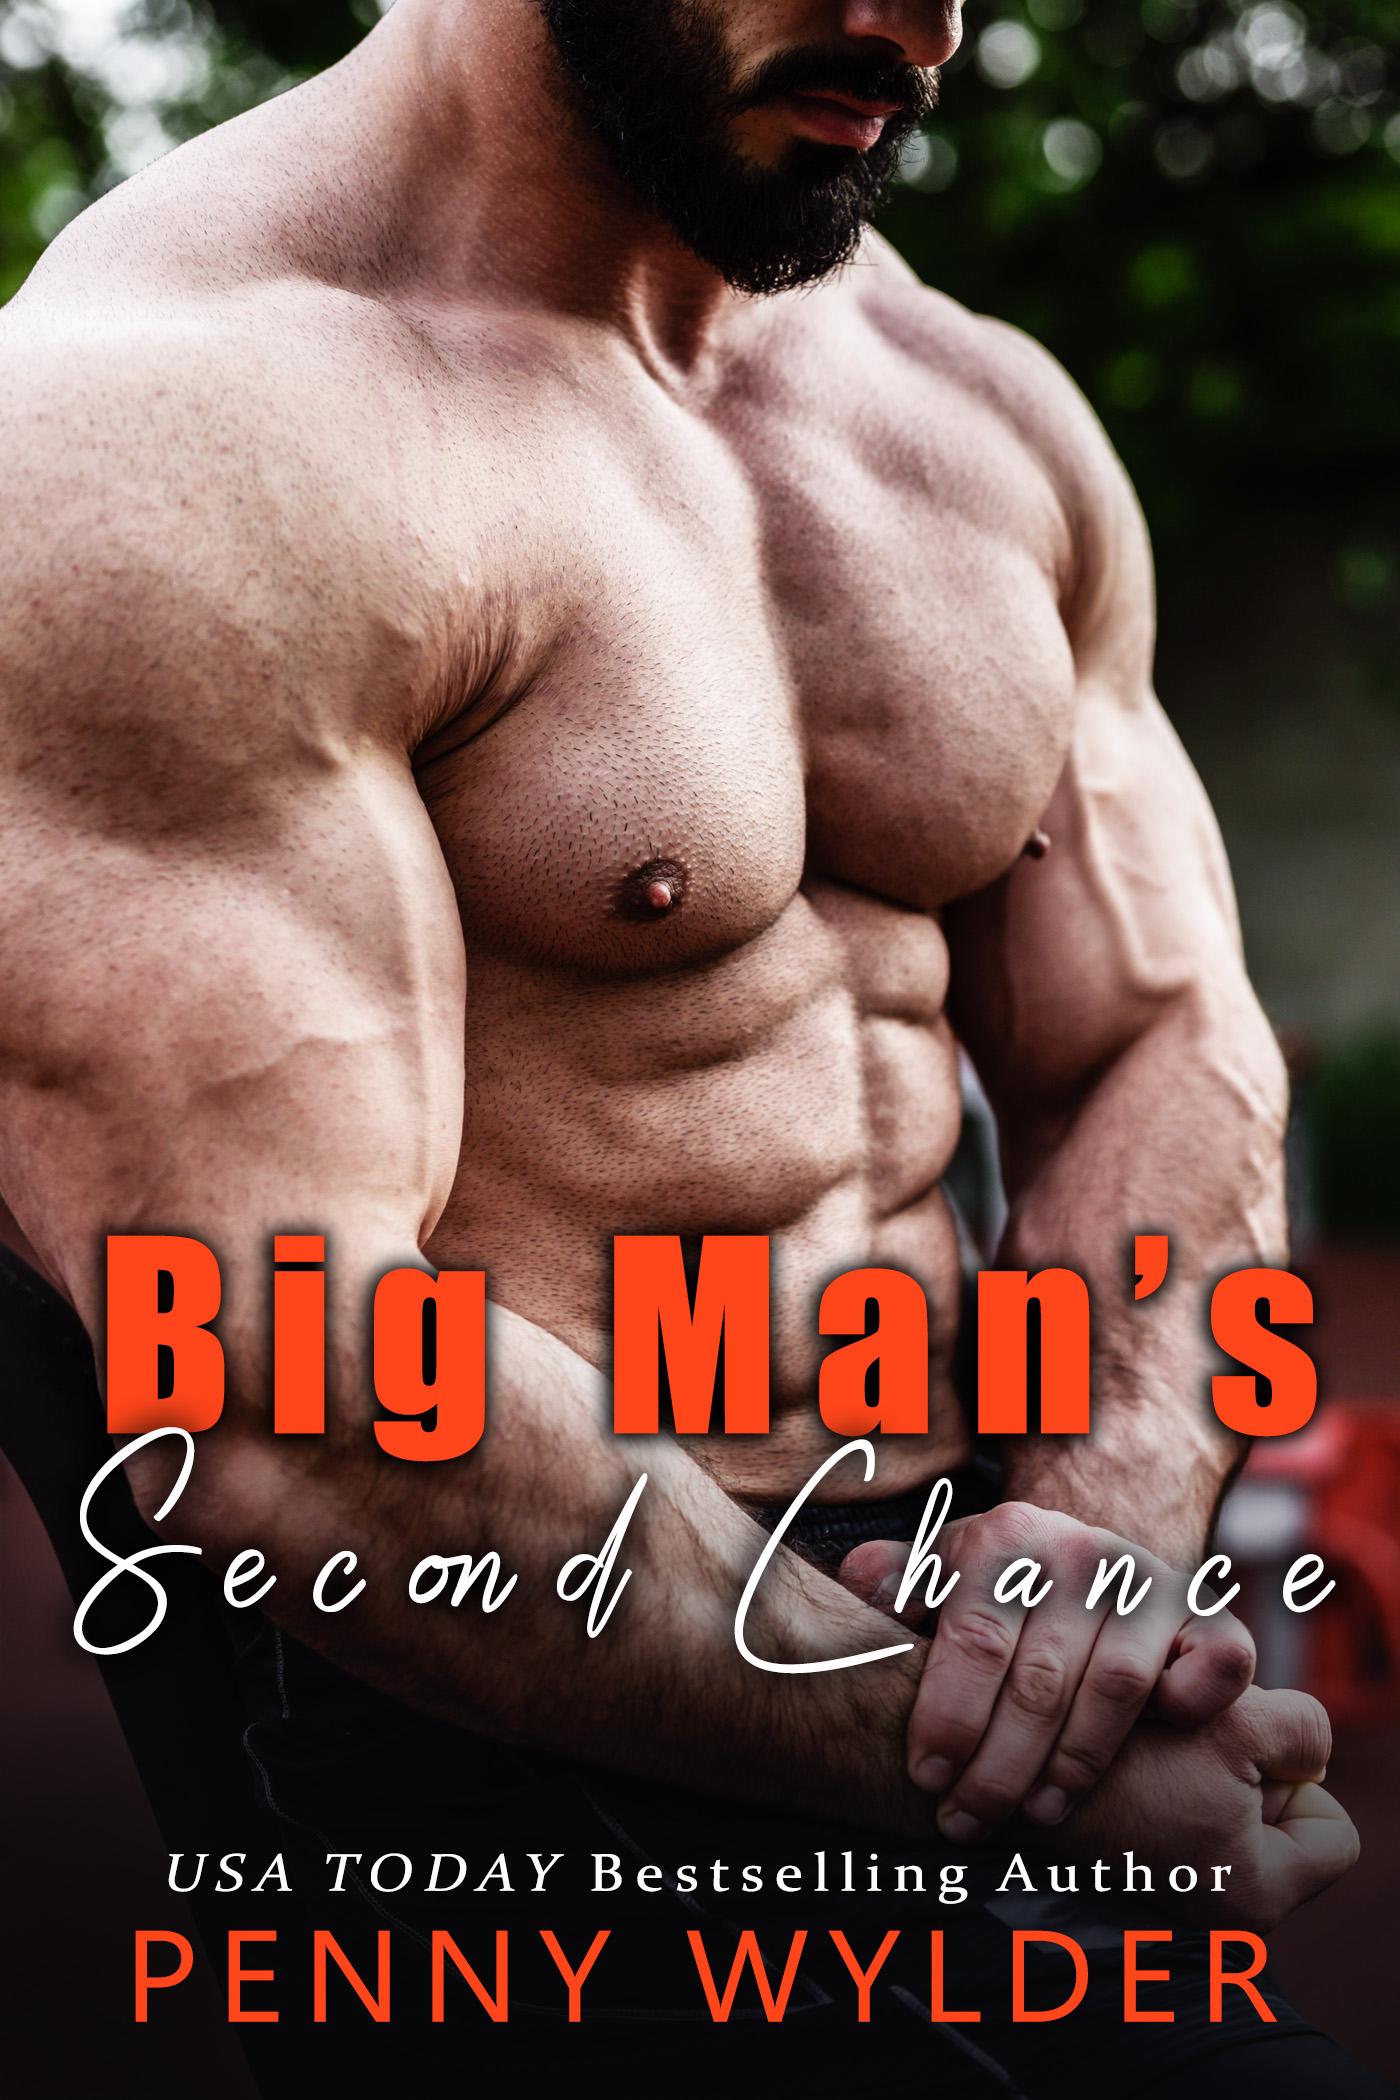 Big Man's Second Chance